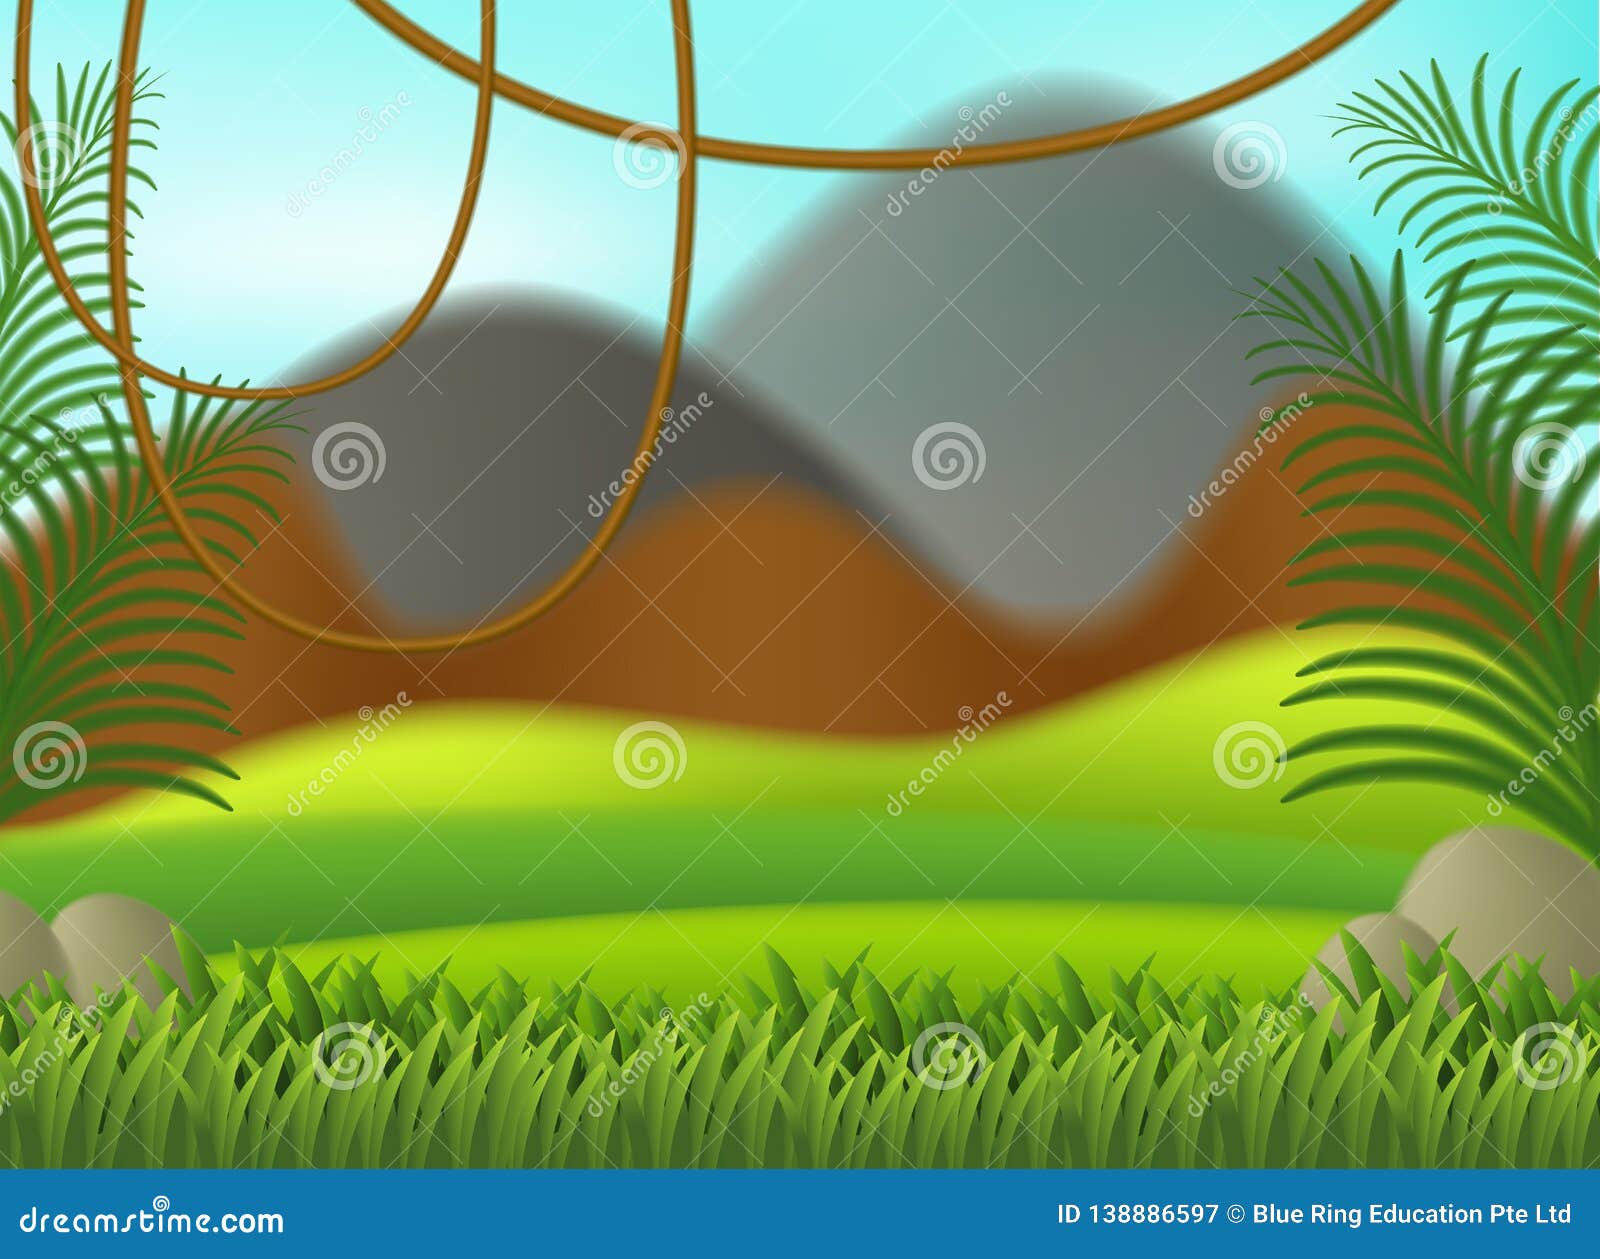 A nature blur background illustration